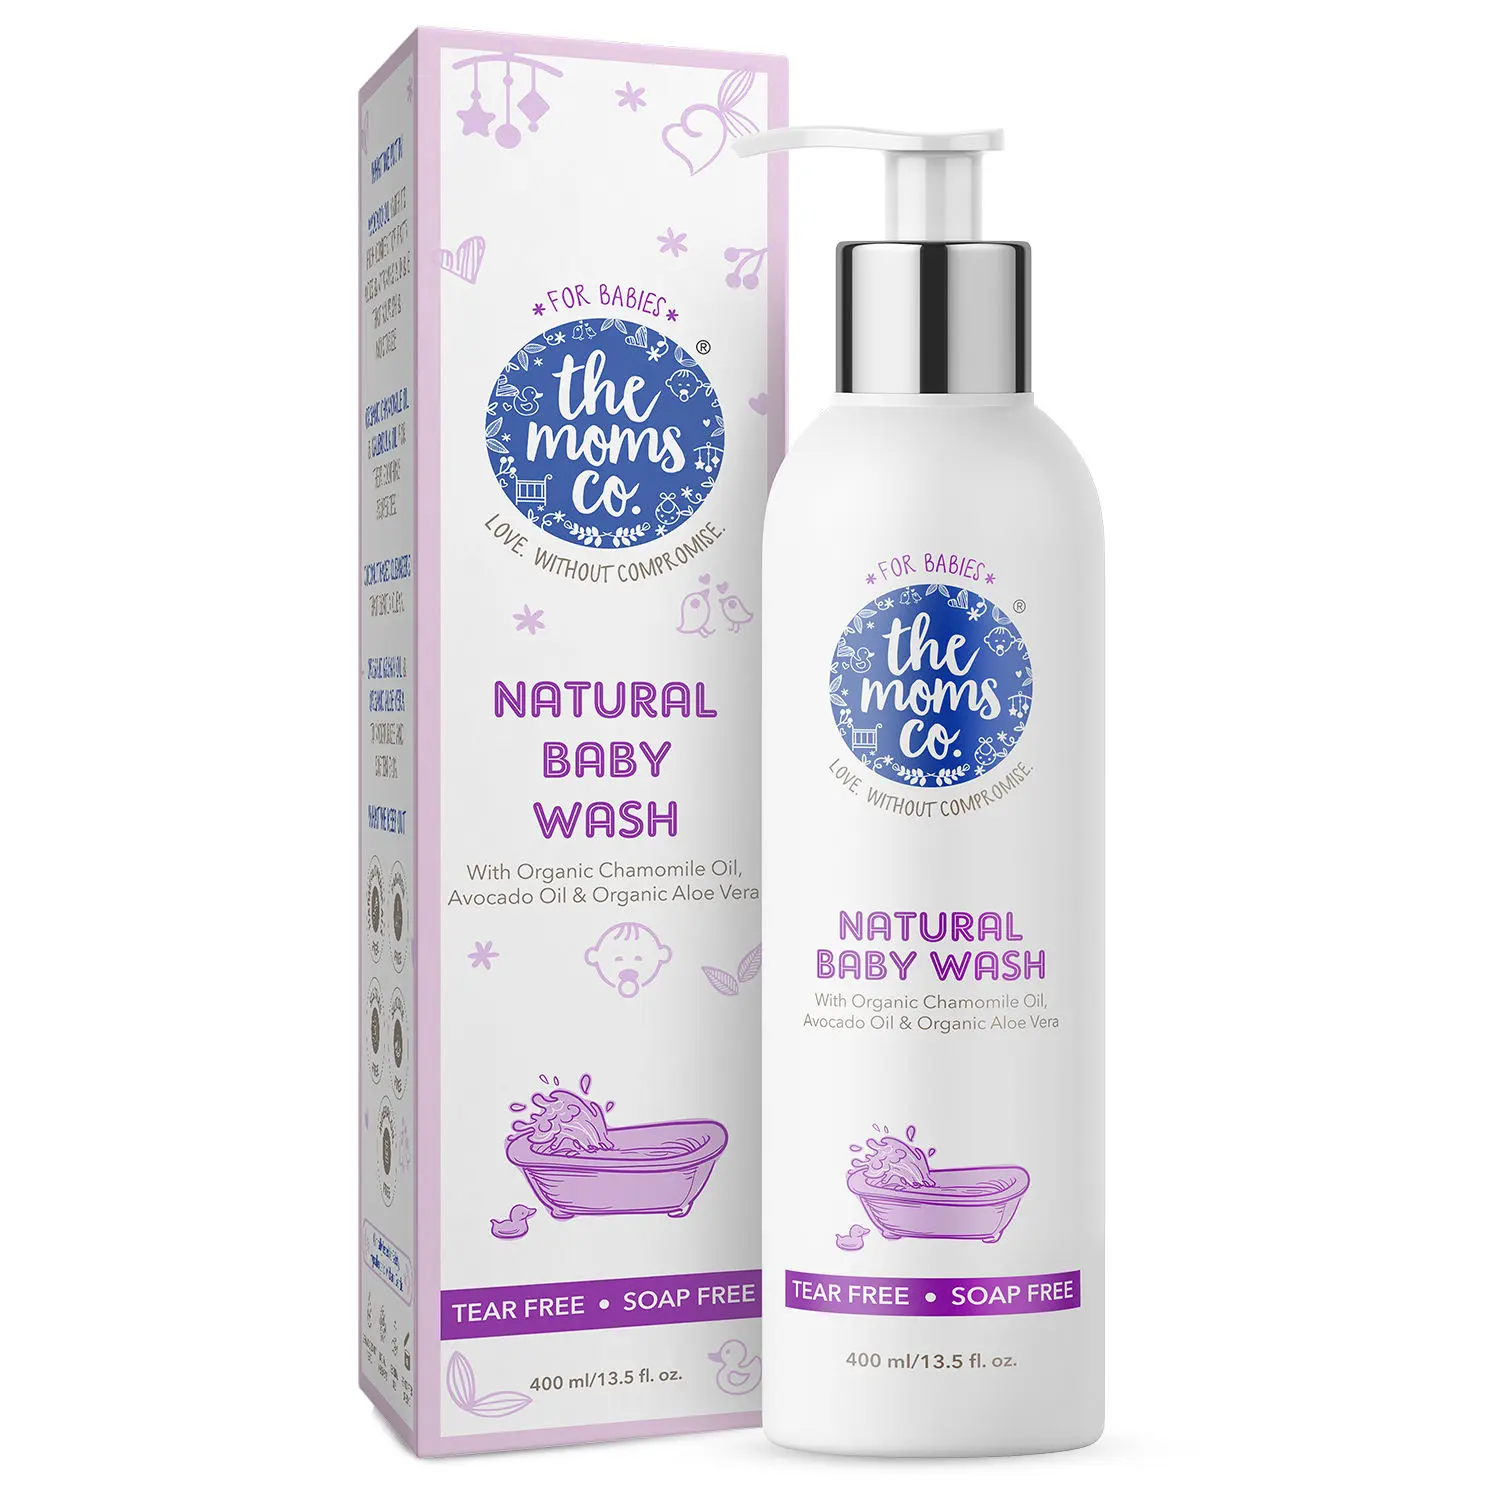 The Moms Co. Natural Baby Body Wash| Tear-Free & Soap-Free| With Calendula, Avocado Oils & USDA-Certified Organic Oils Like Argan, Chamomile 400 ml